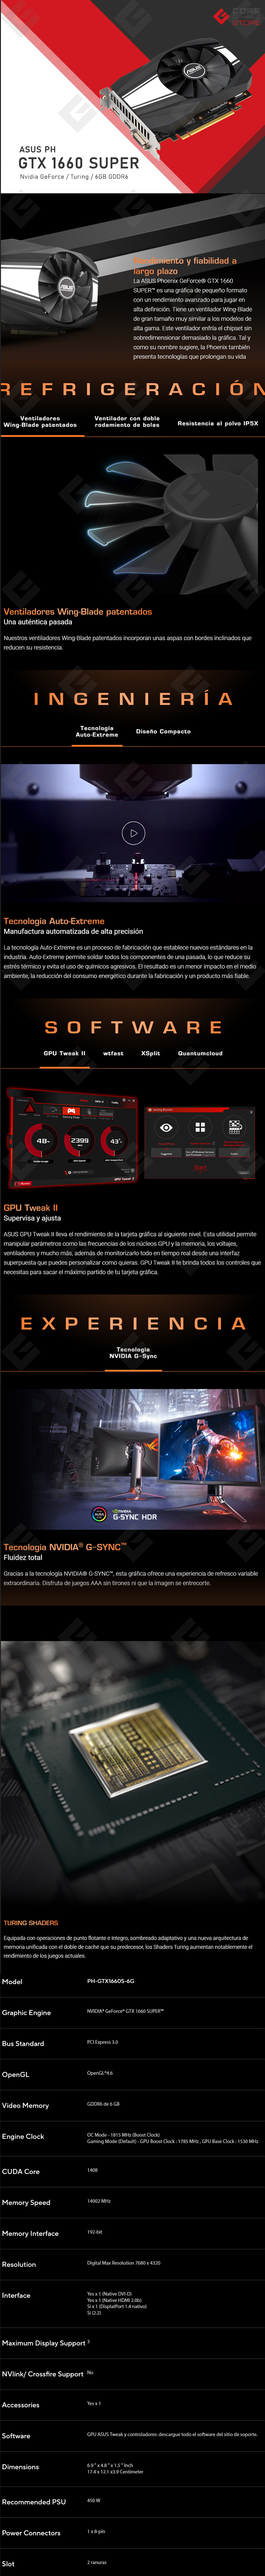 Tarjeta de Video Nvidia Asus Phoenix GeForce GTX 1660 Super 6GB GDDR6 - PH-GTX1660S-6G